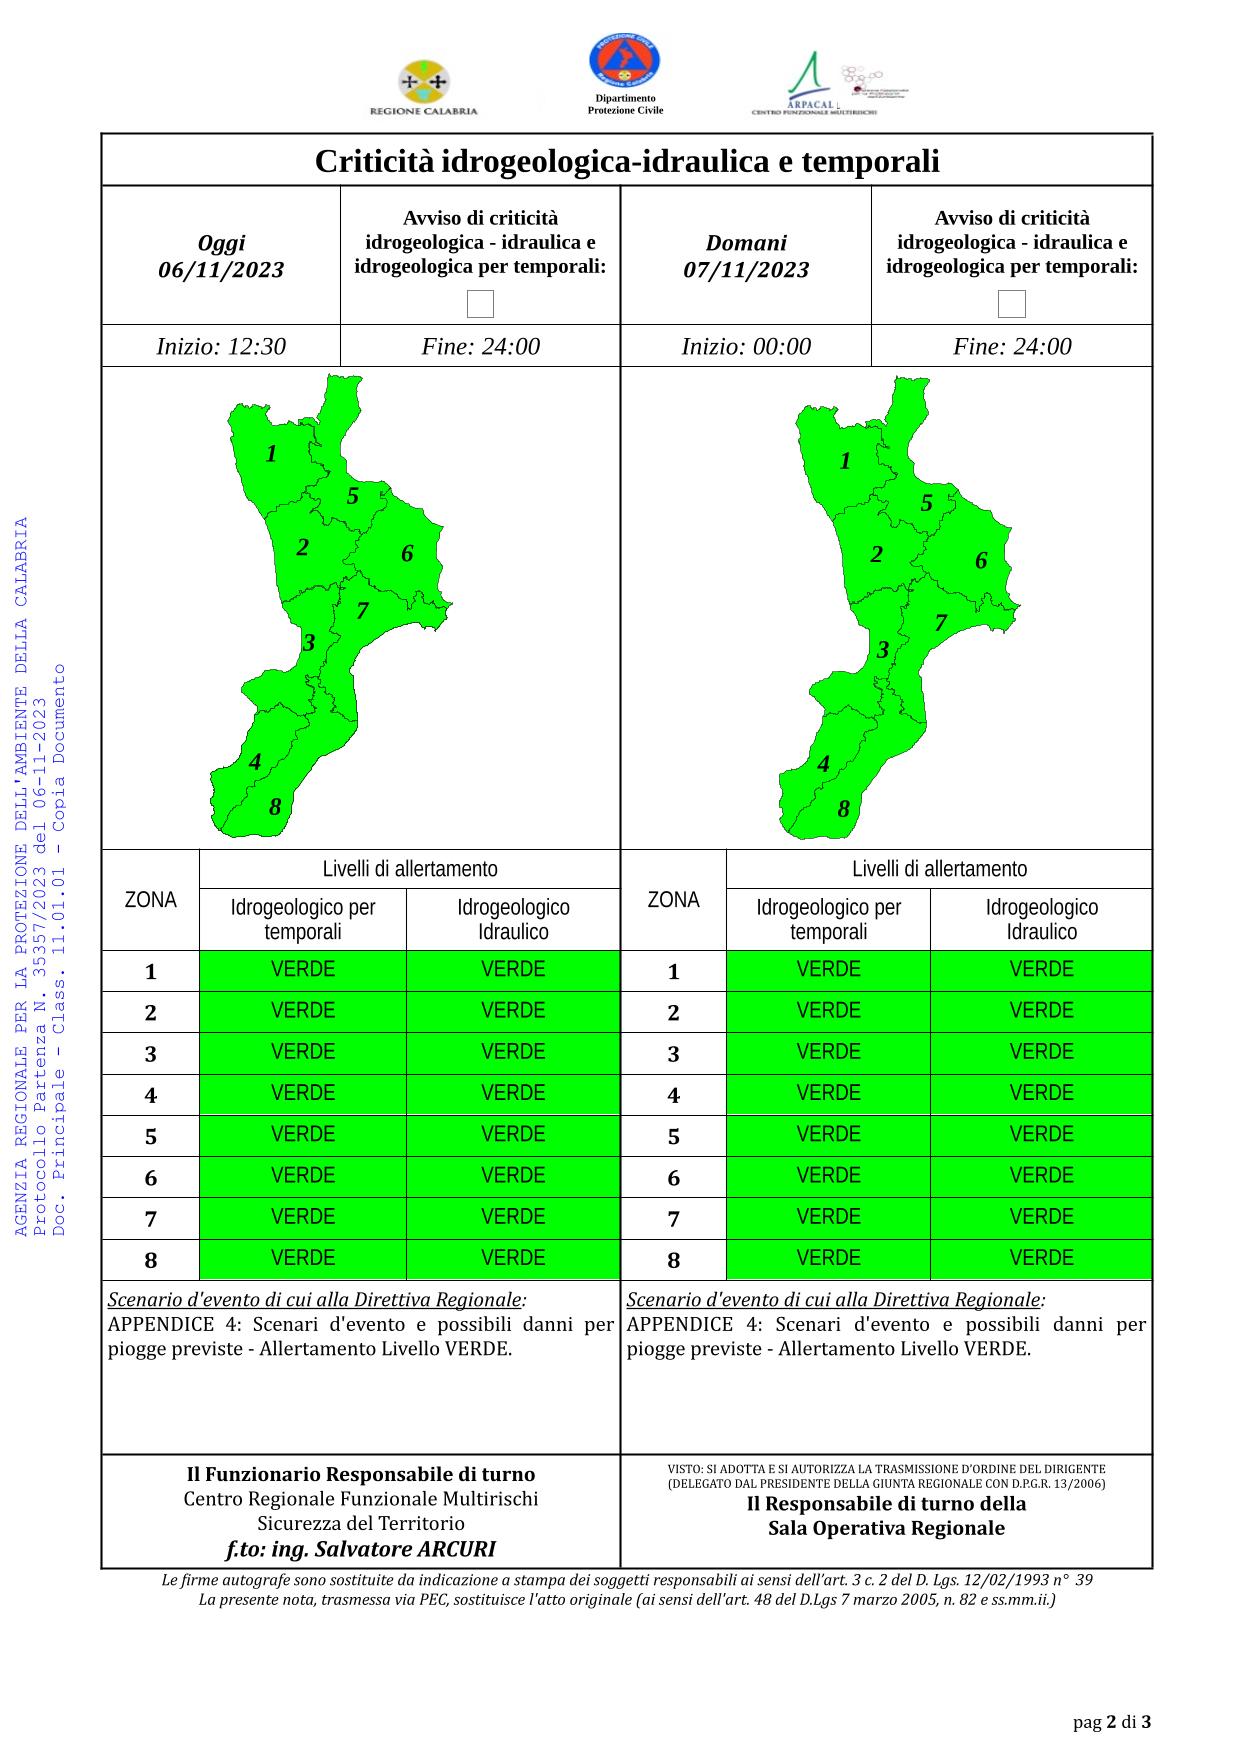 Criticità idrogeologica-idraulica e temporali in Calabria 06-11-2023